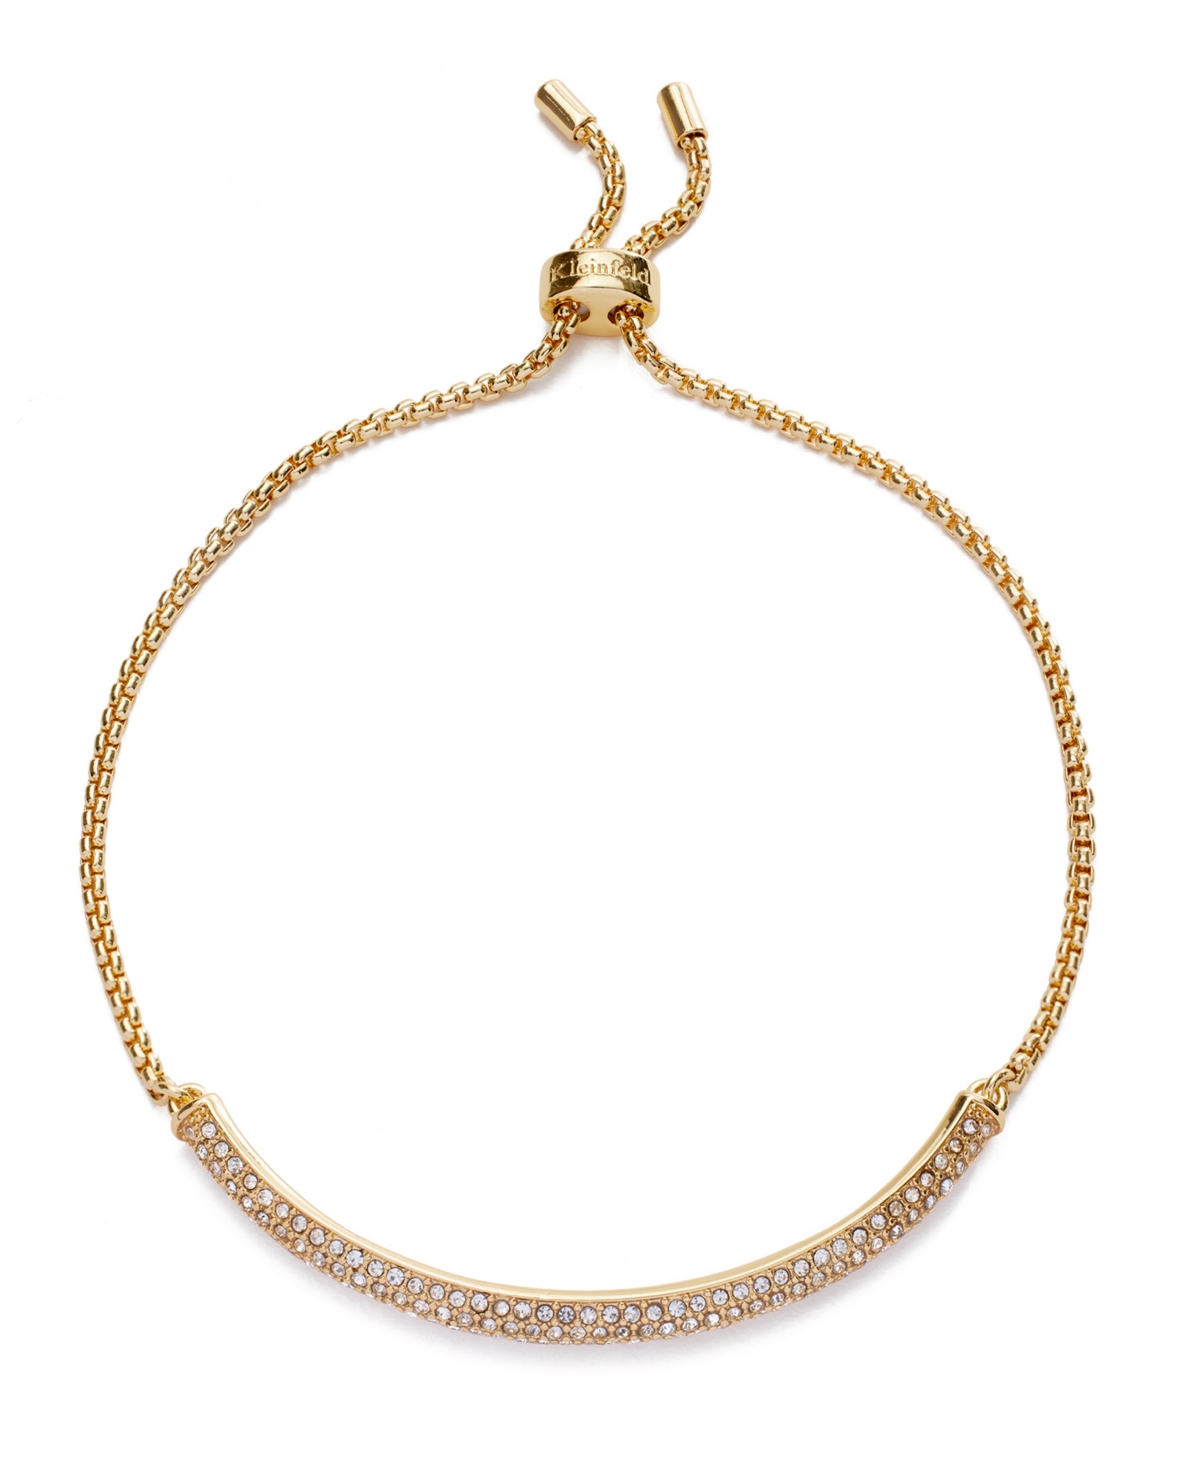 Faux Stone Pave Bar Delicate Bracelet - Crystal, Gold